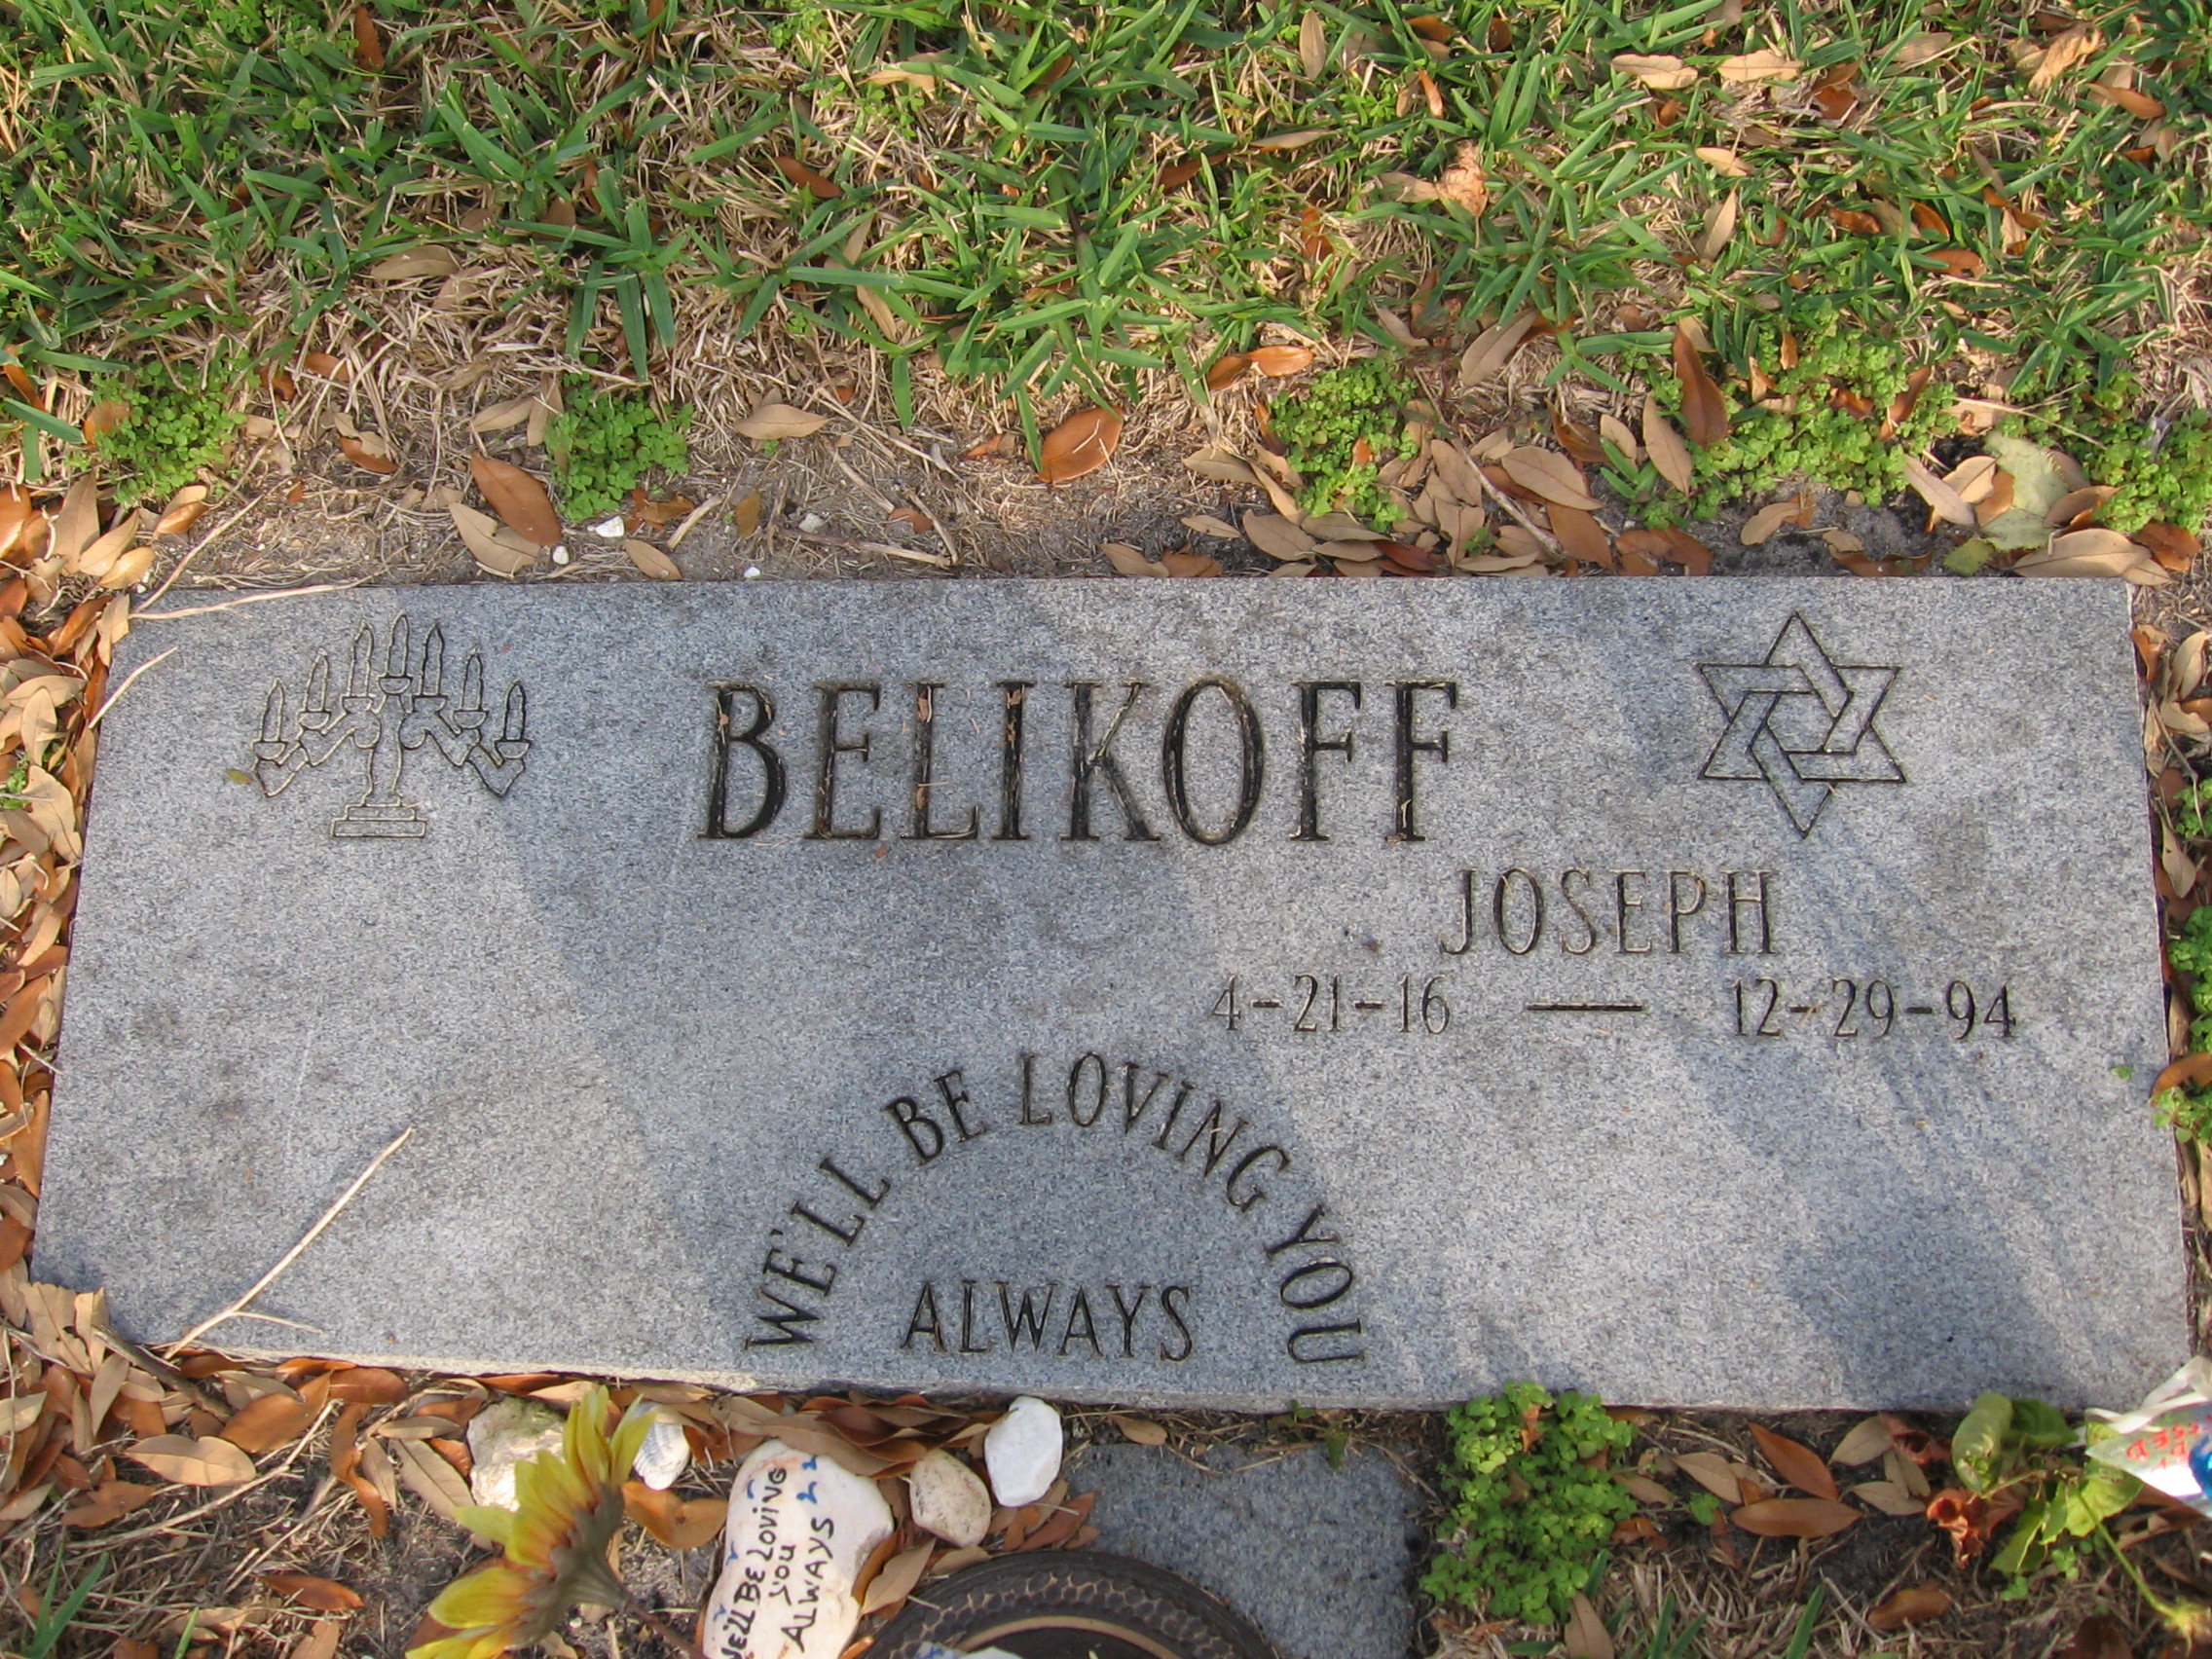 Joseph Belikoff